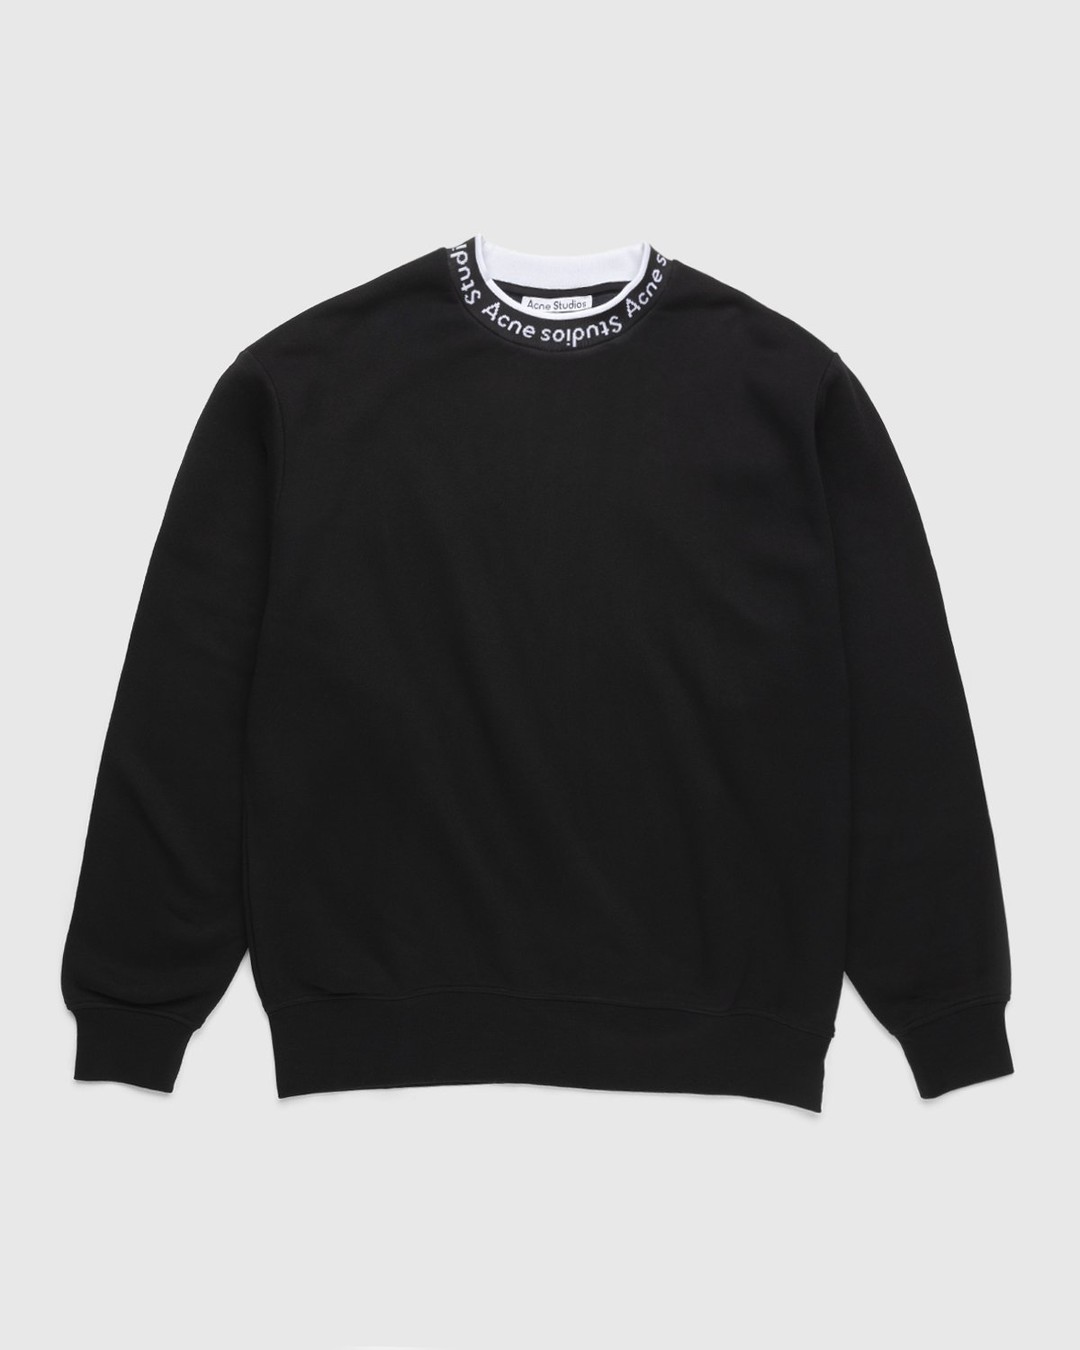 Acne Studios – Logo Rib Sweatshirt Black - Sweatshirts - Black - Image 1